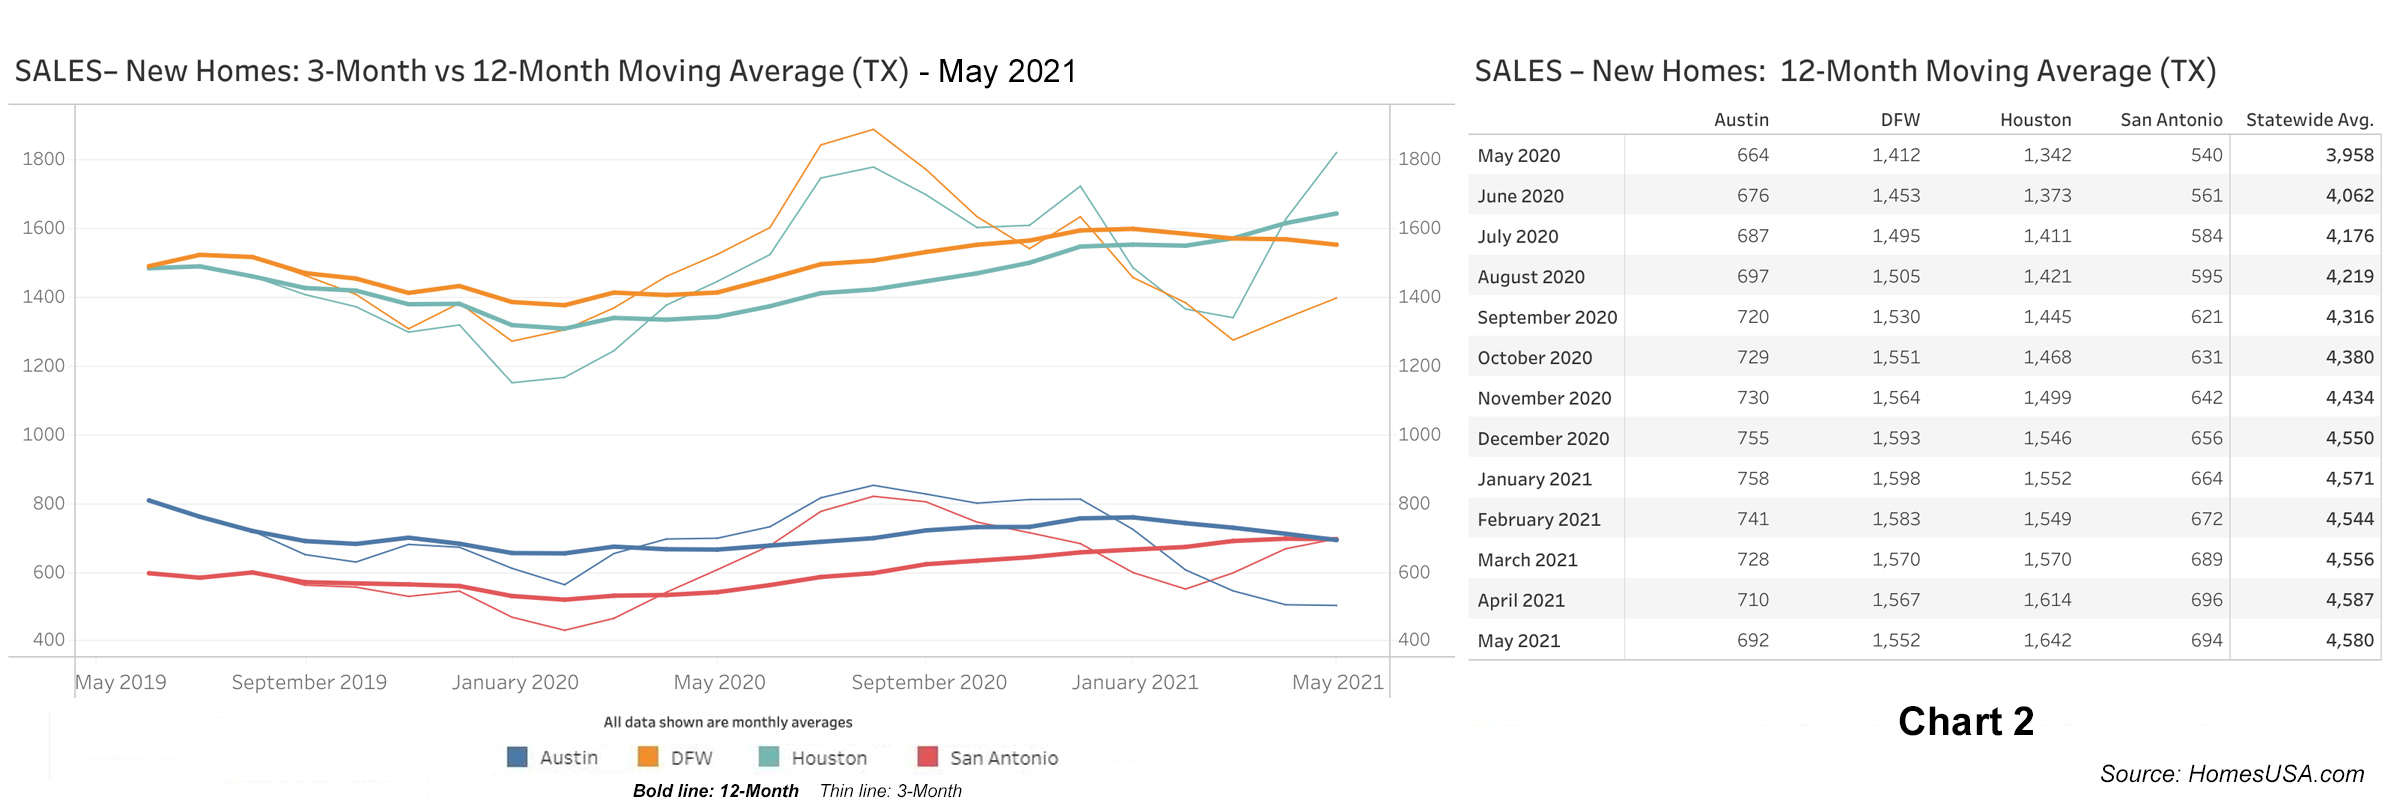 Chart 2: Texas New Home Sales - May 2021